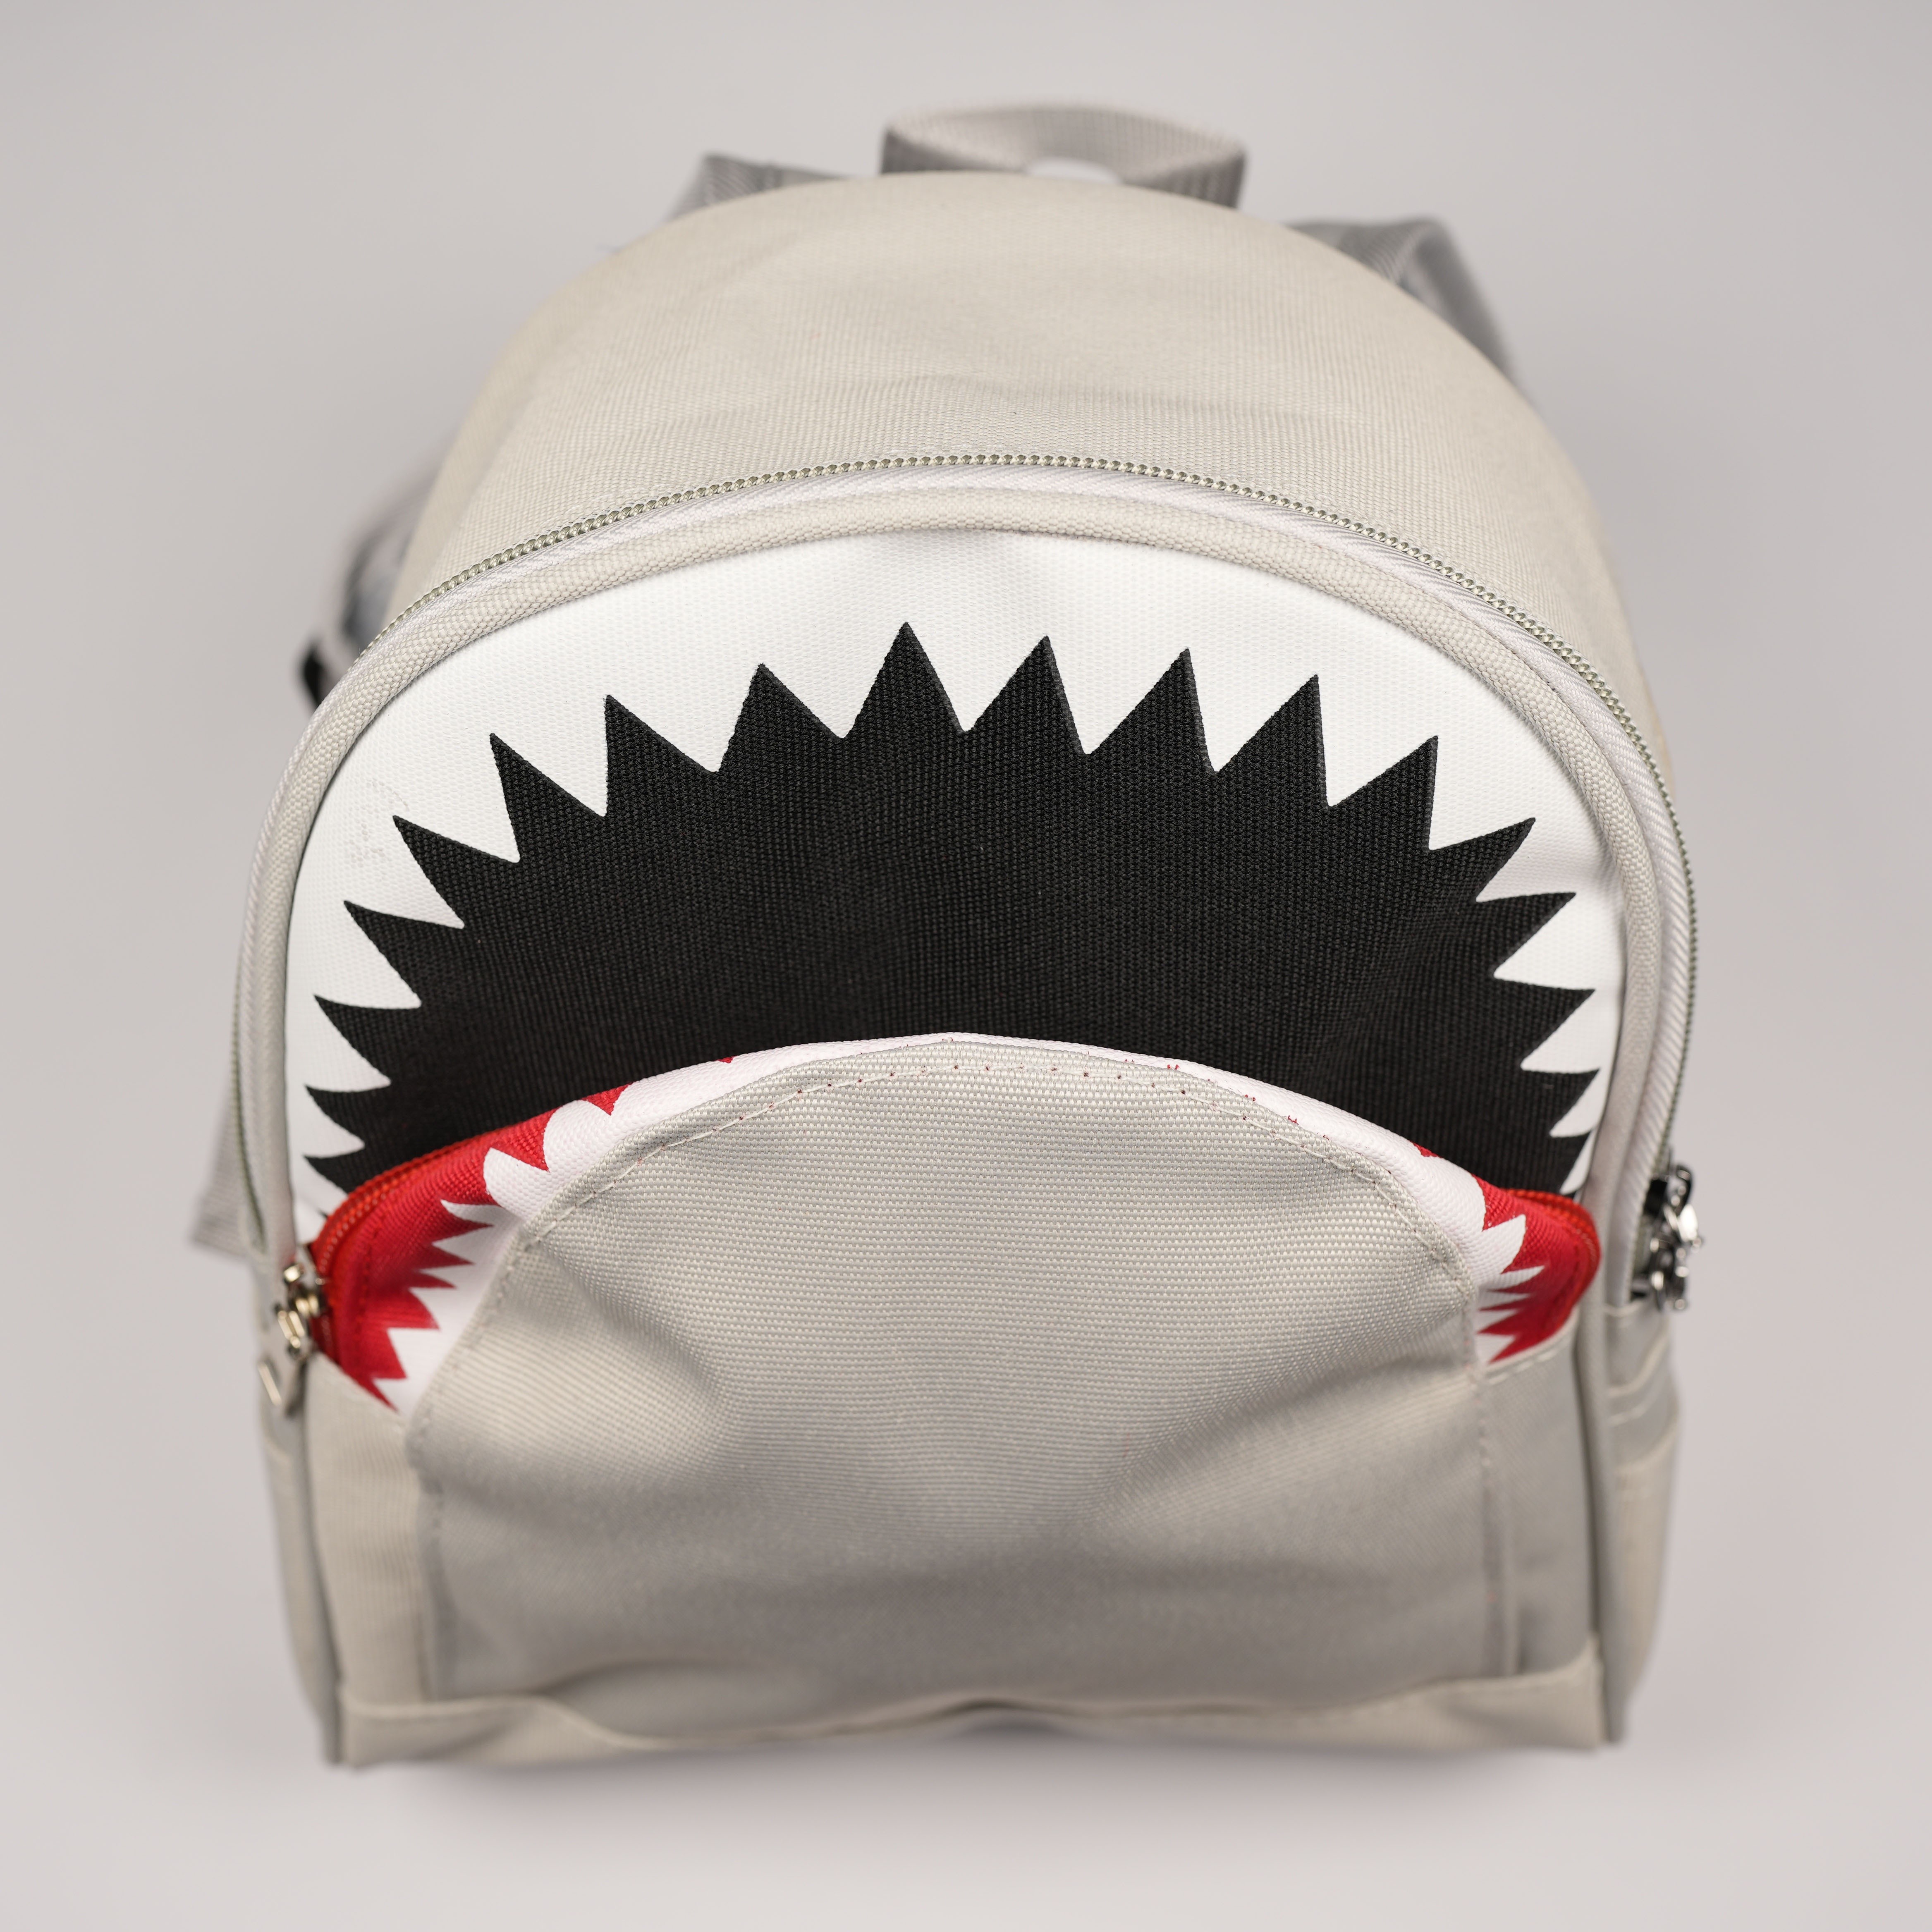 Grey Shark Backpack